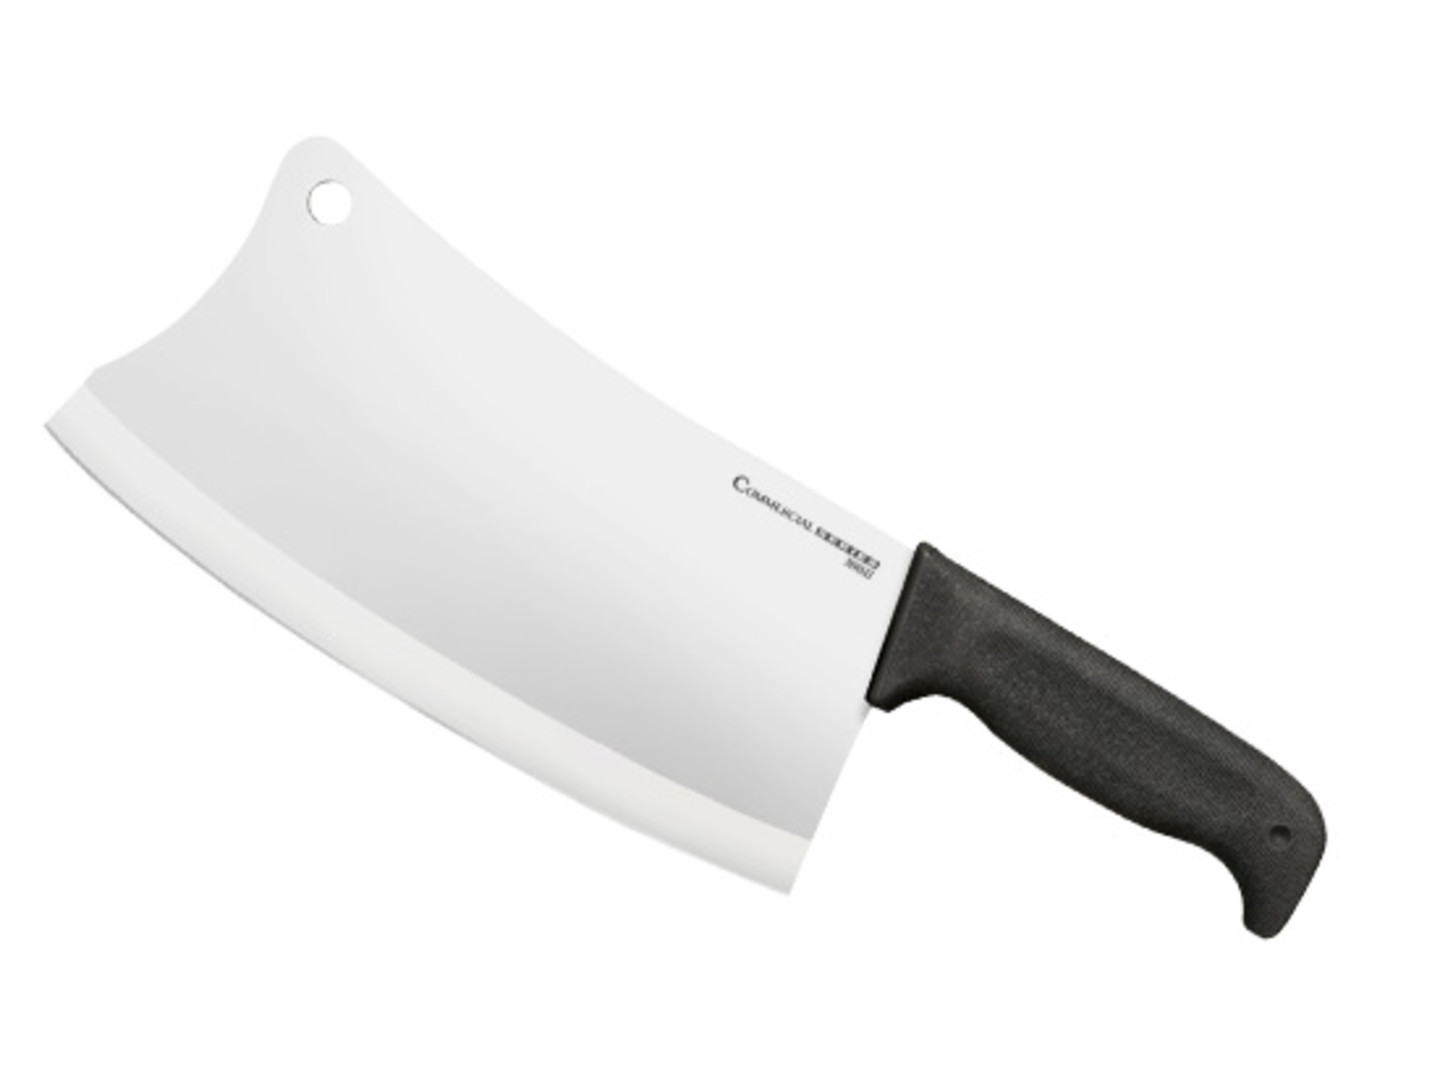 Кухонный топорик Cold Steel Cleaver (Commercial Series) 20VCLEZ сталь 1.4116 рукоять Kray-Ex